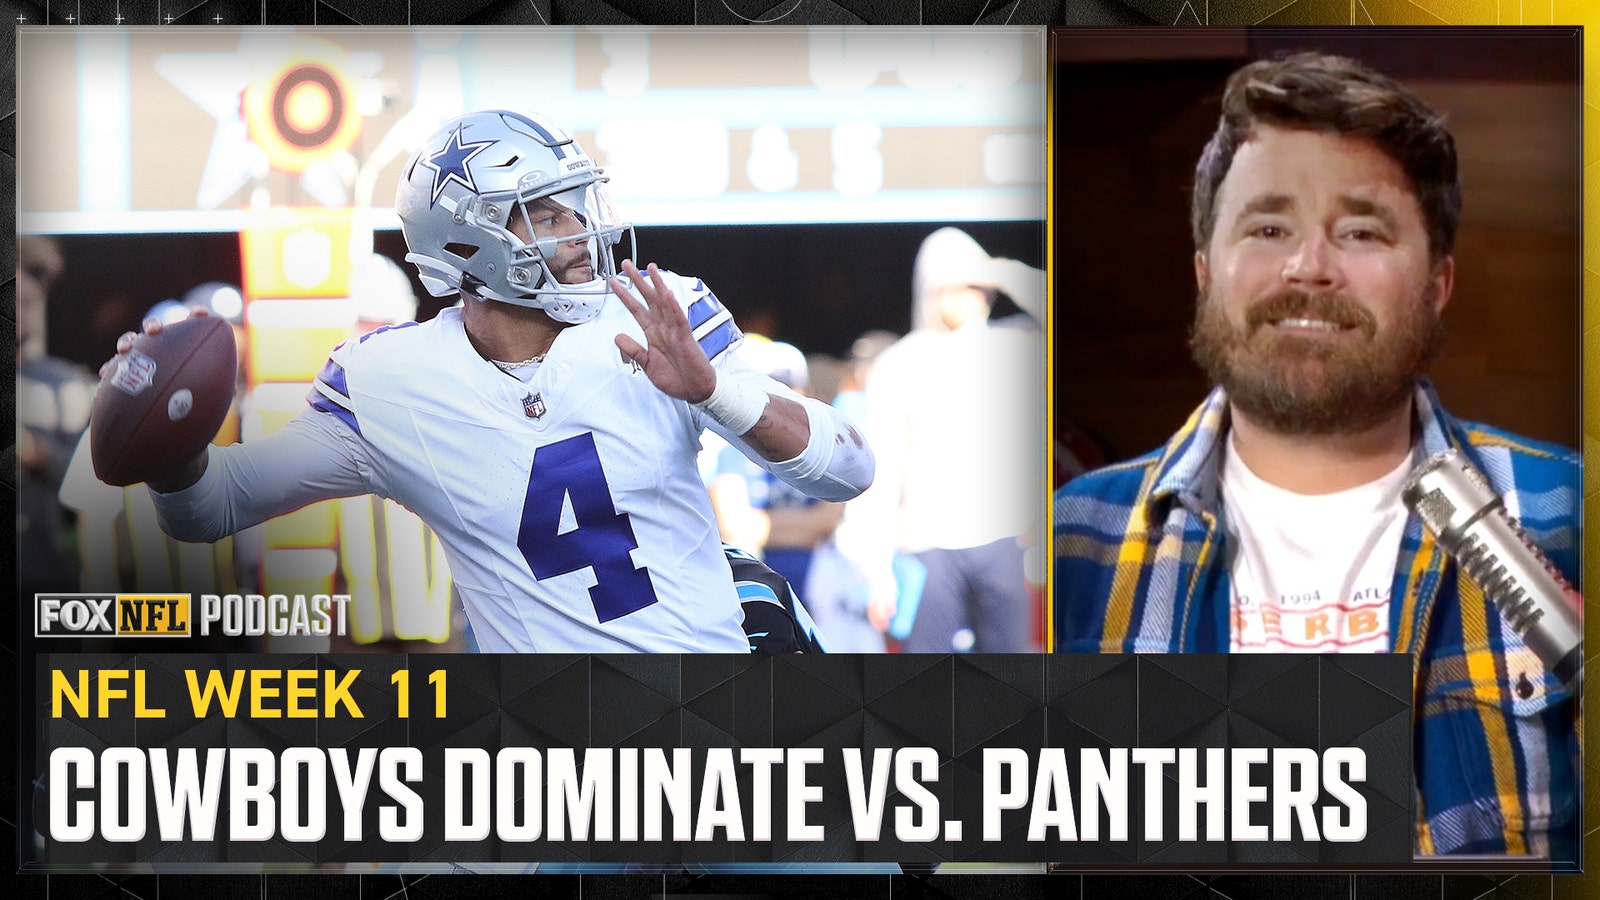 Cowboys dominant against Panthers in Week 11